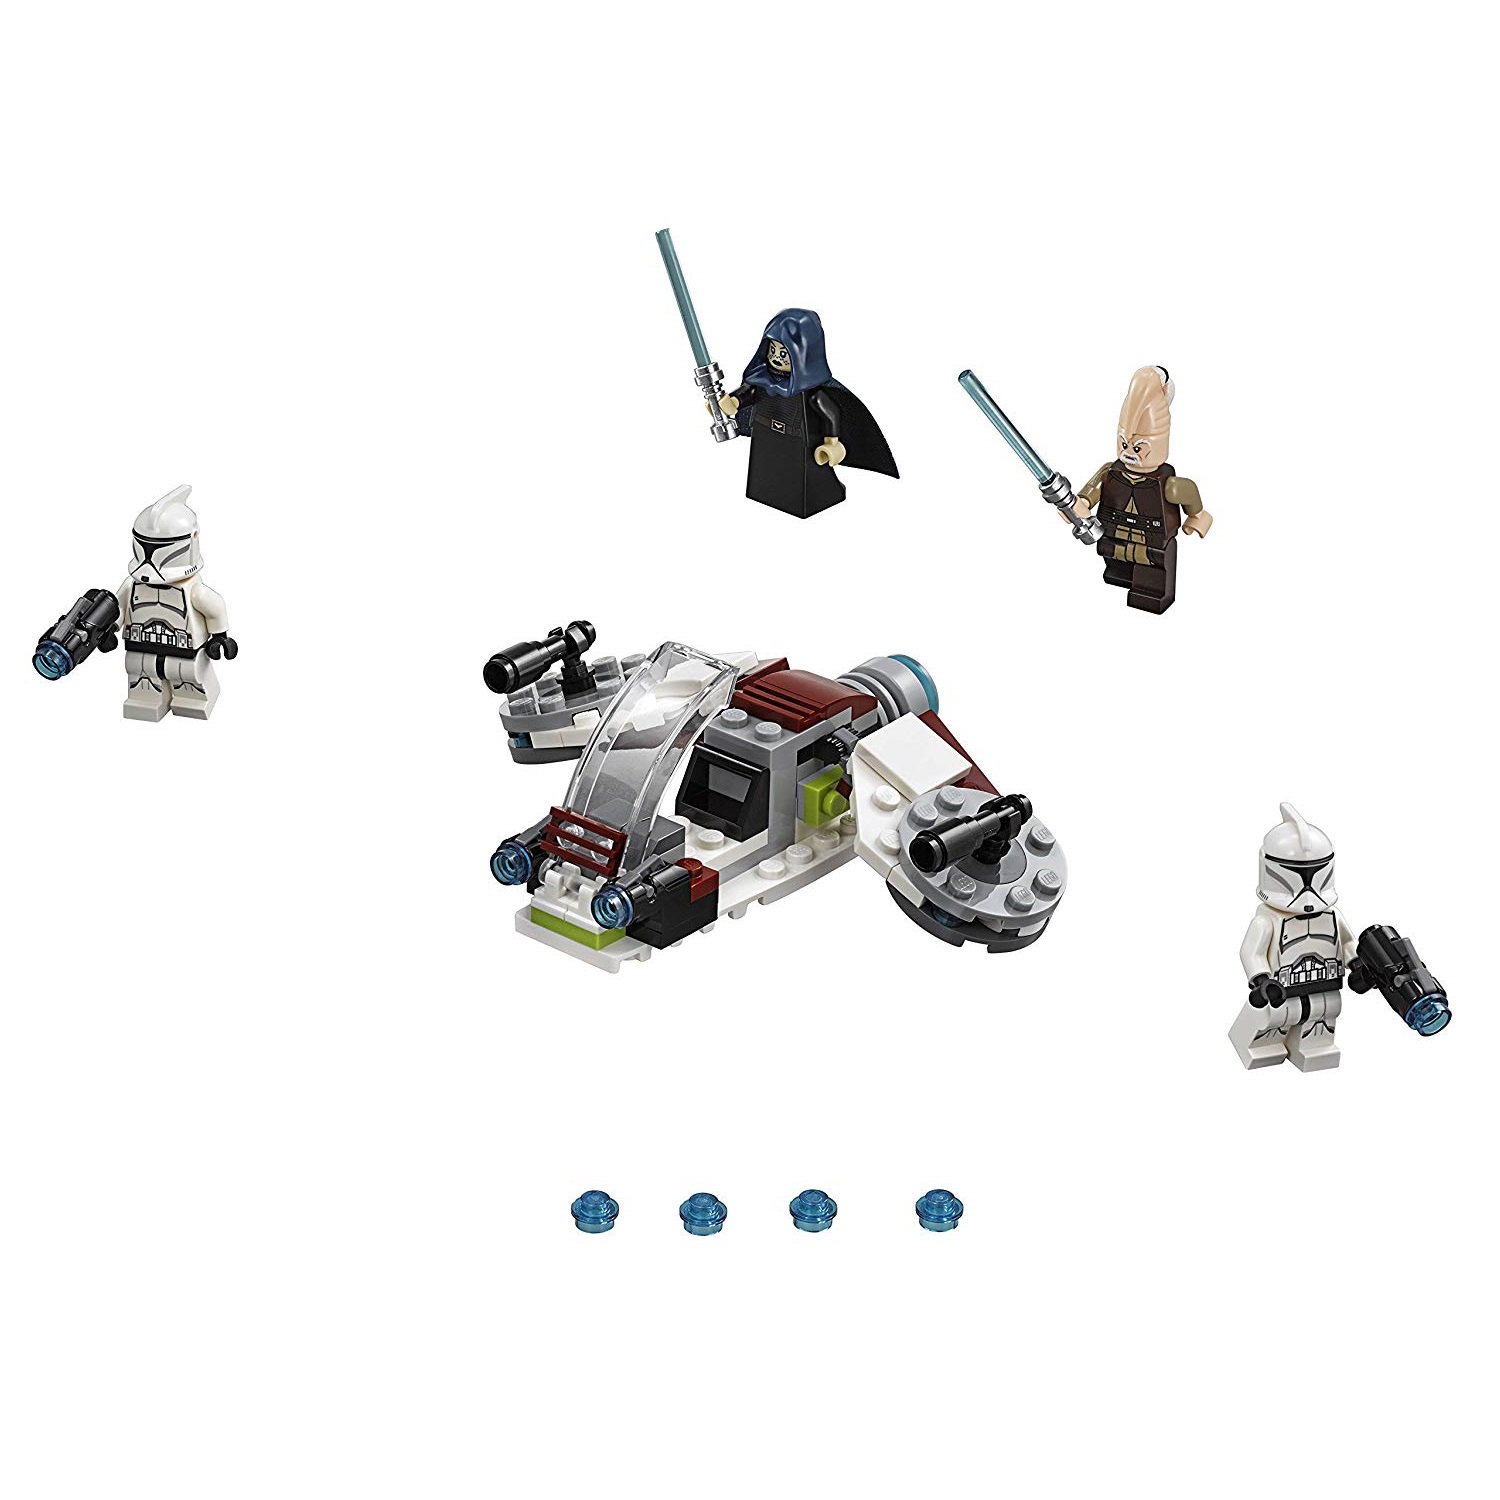 Конструктор LEGO Star wars 